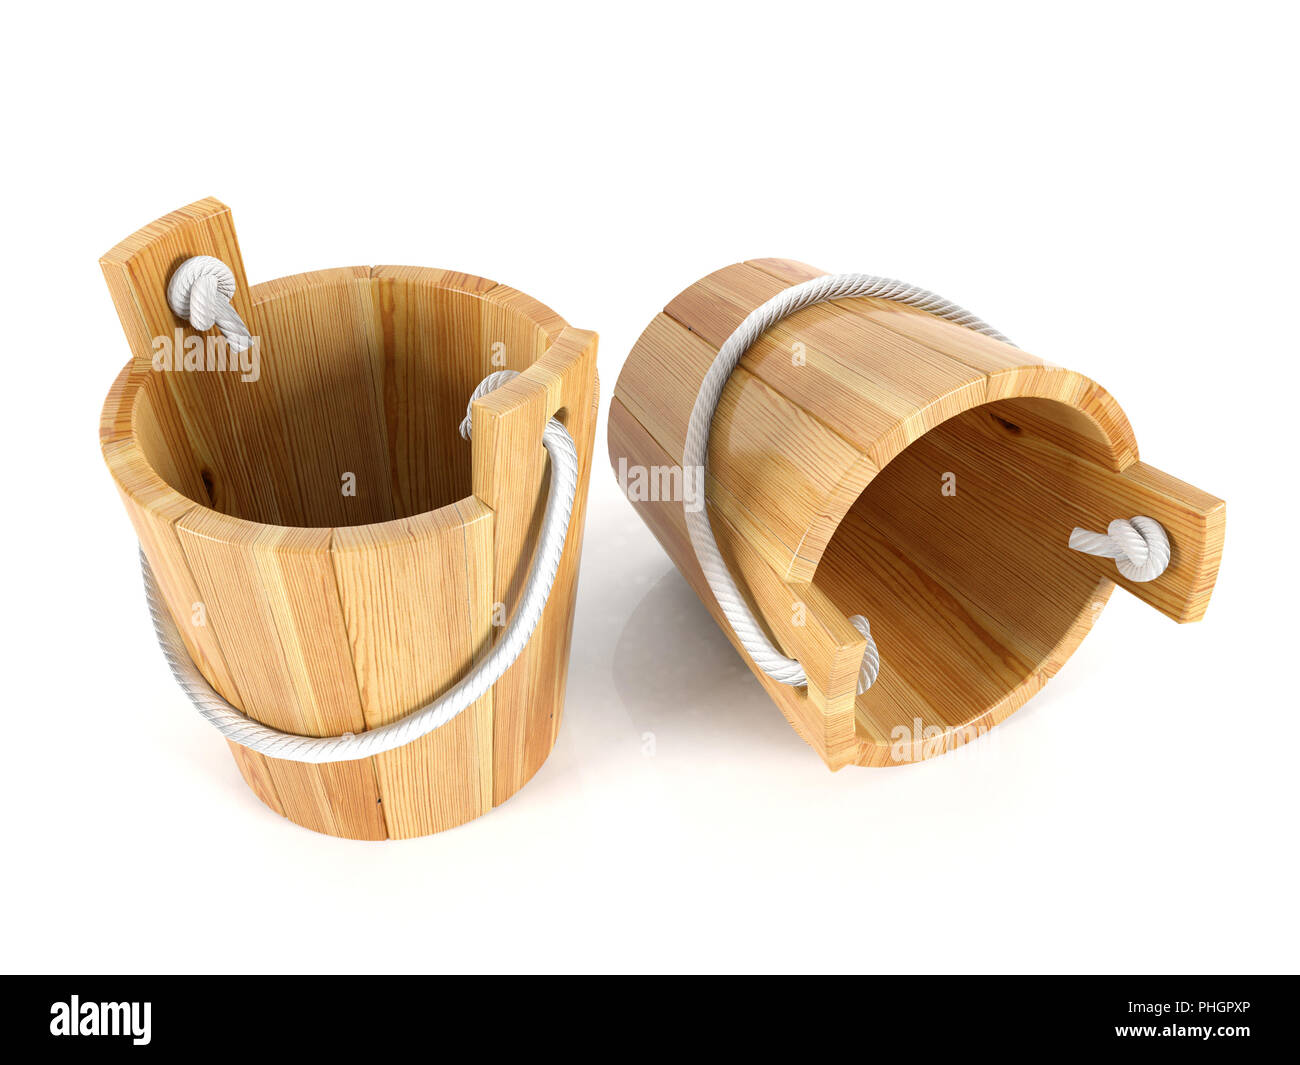 Wooden bucket isolated on white background Stock Photo